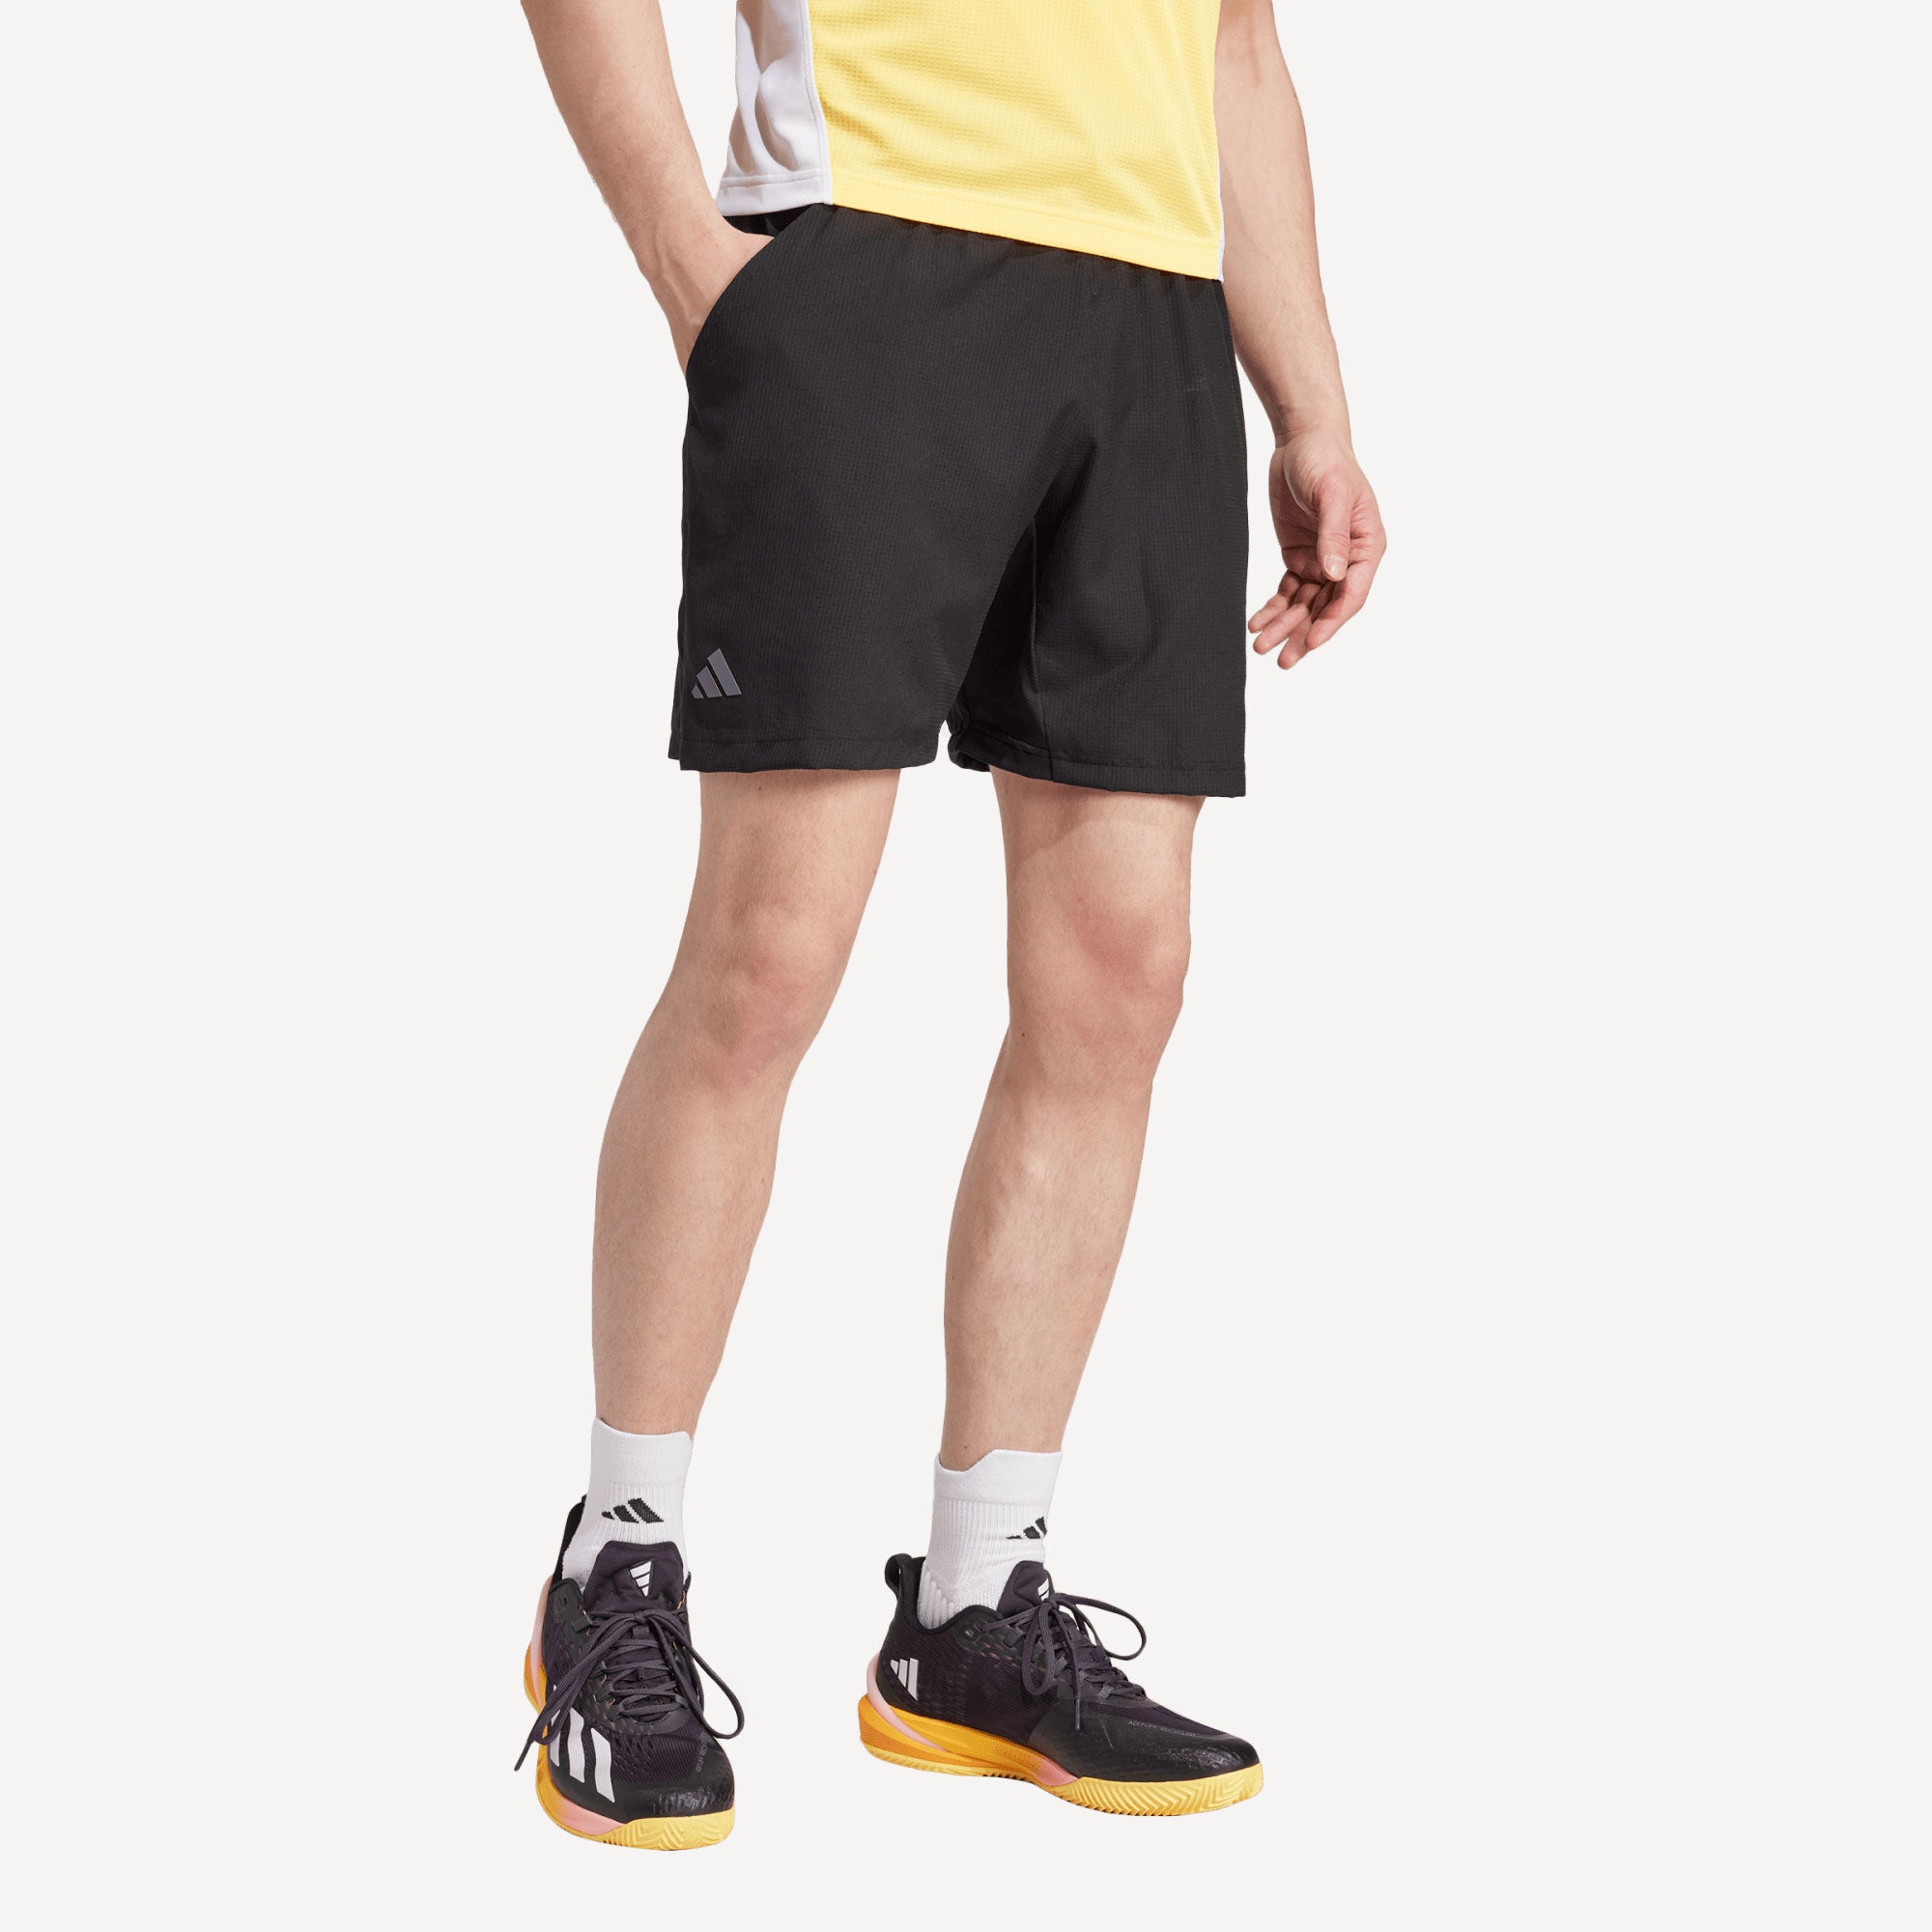 adidas Pro Paris Men's Tennis Shorts and Inner Shorts Set - Black (1)